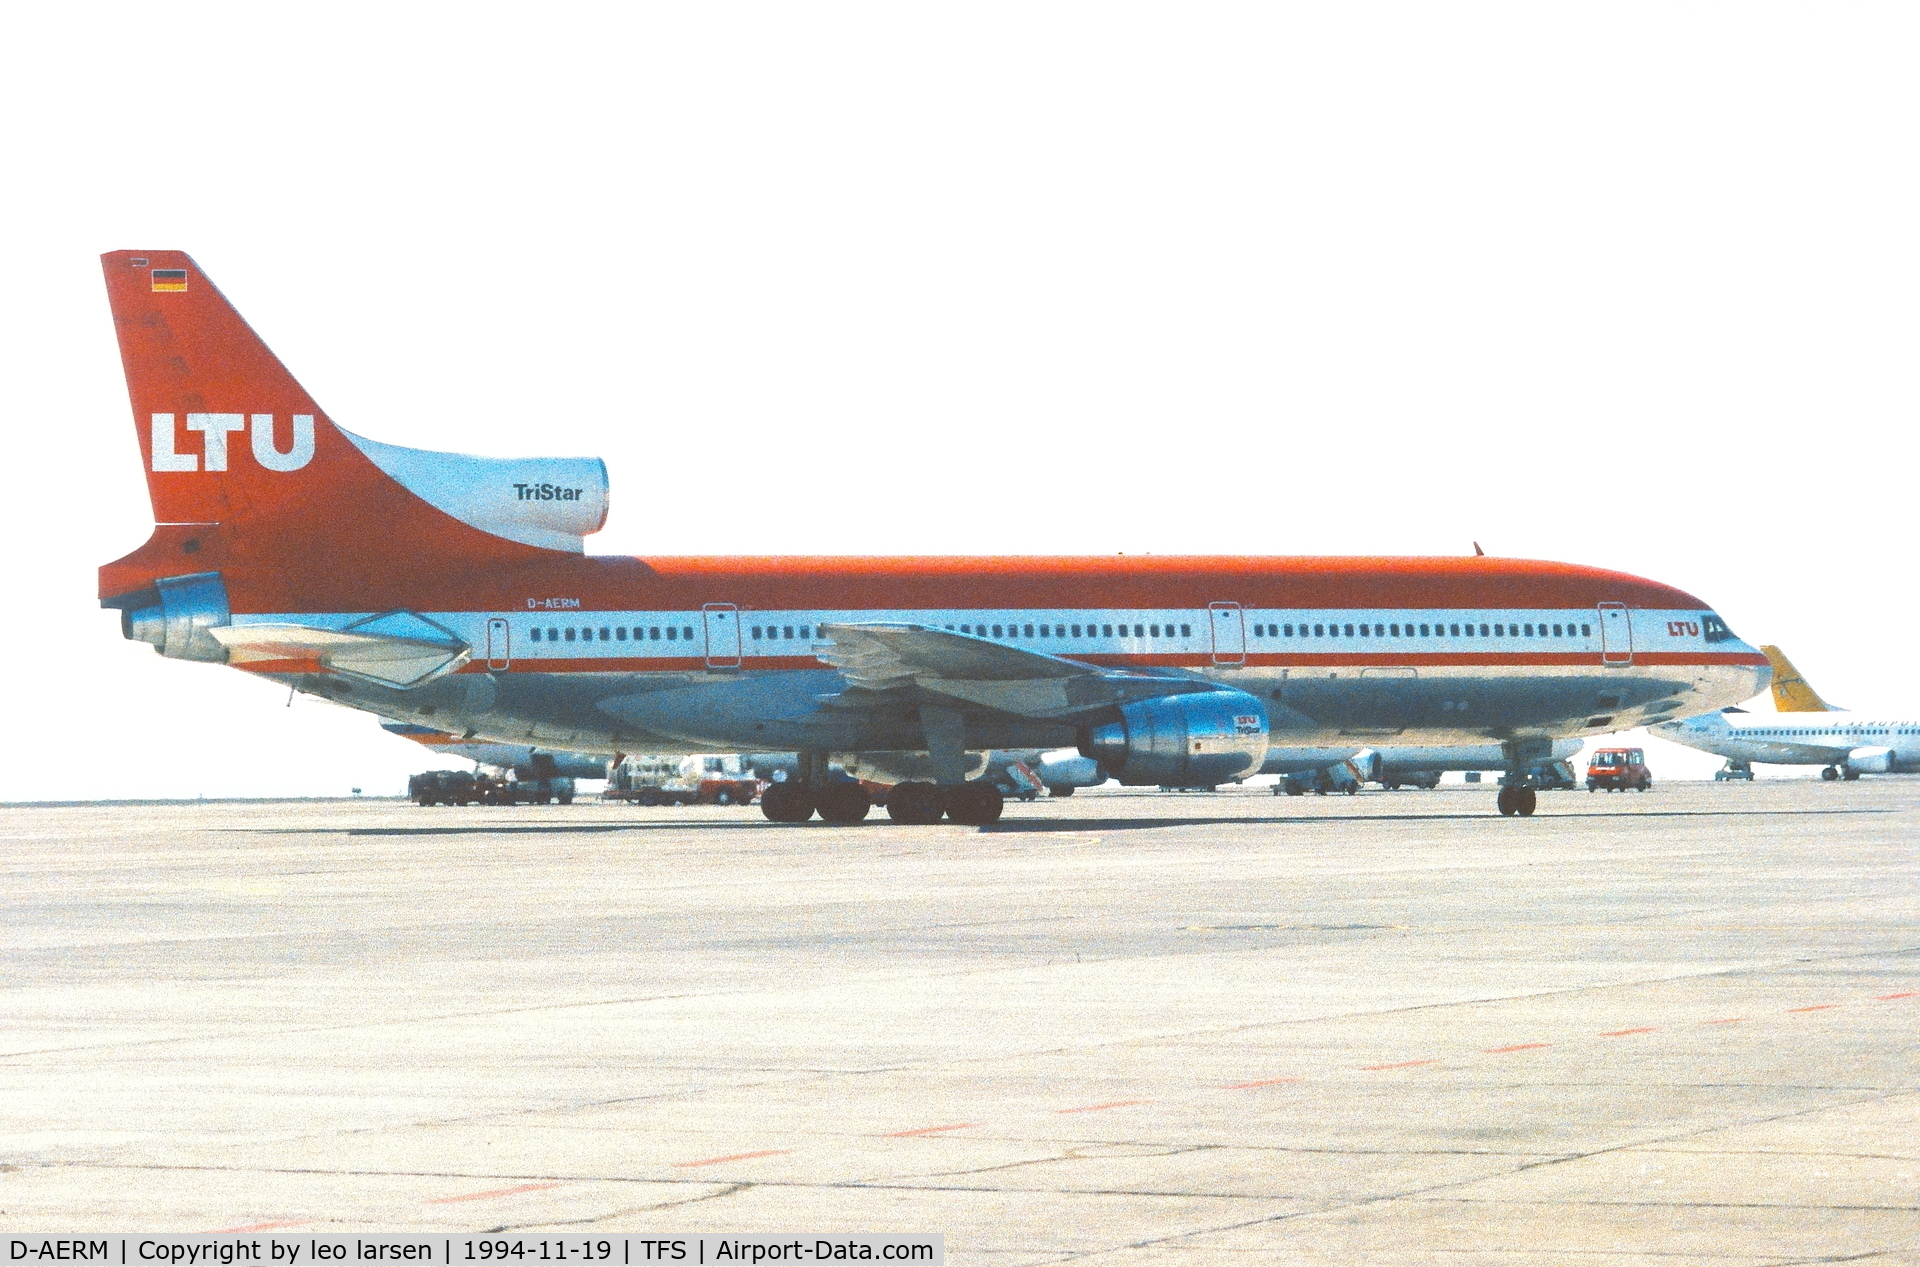 D-AERM, 1978 Lockheed L-1011-385-1 TriStar 1 C/N 193A-1153, Tenerife South 19.11.1994